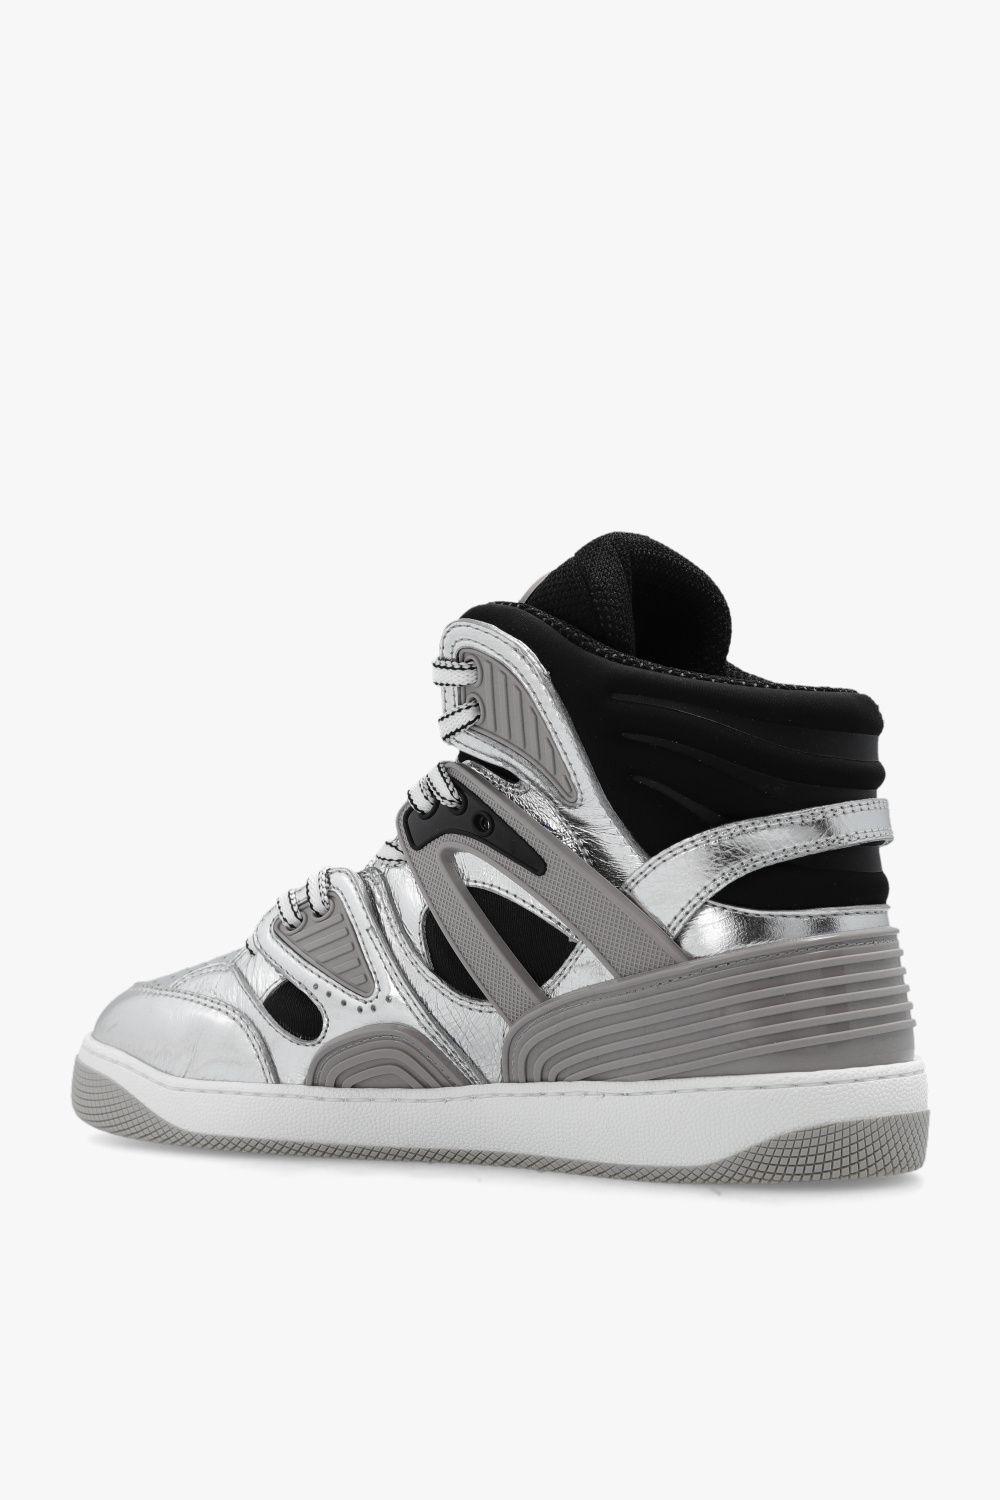 Gucci Gucci Basket Black high-top Sneakers - Farfetch